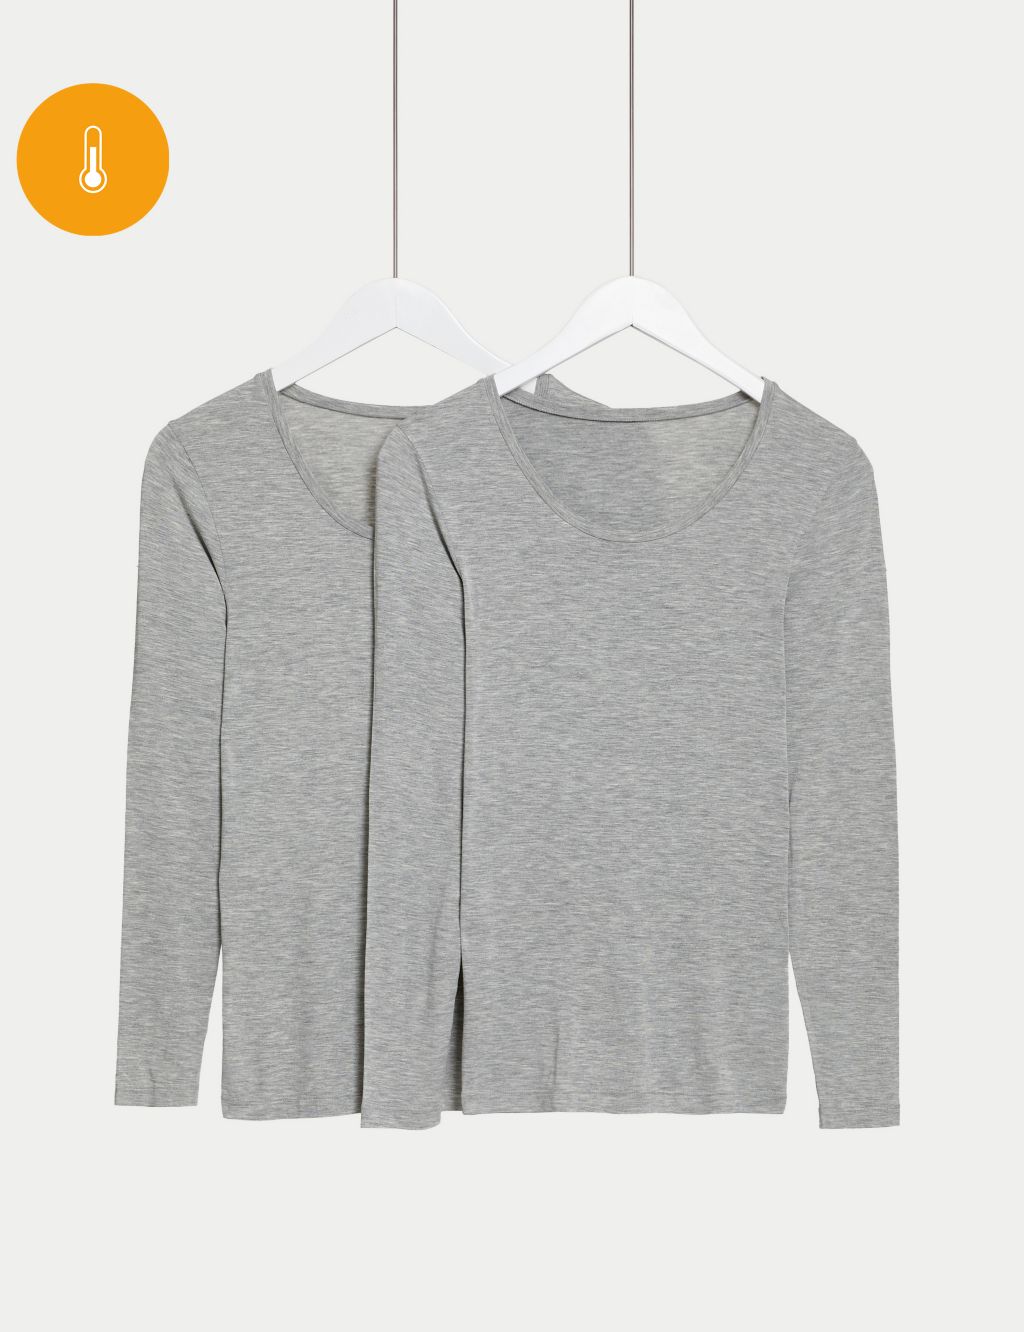 Buy Jairy Shop Thermal Wear for Women Thermal Top Sleeveless (Grey Milange)  (s, Grey) at